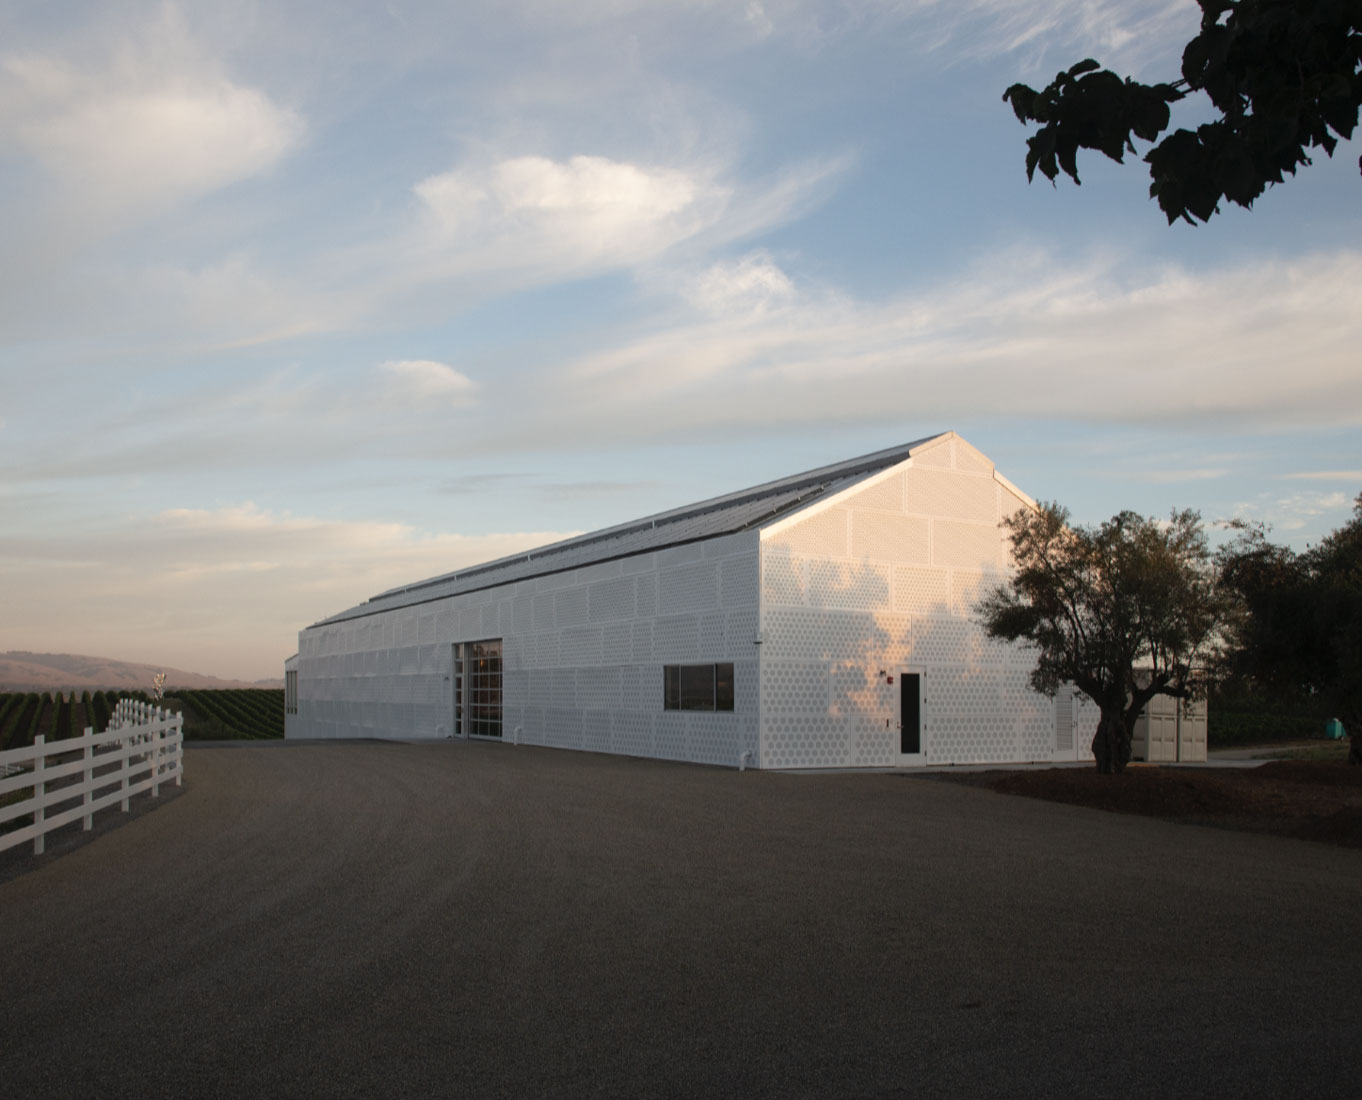 Donum's winemaking facility